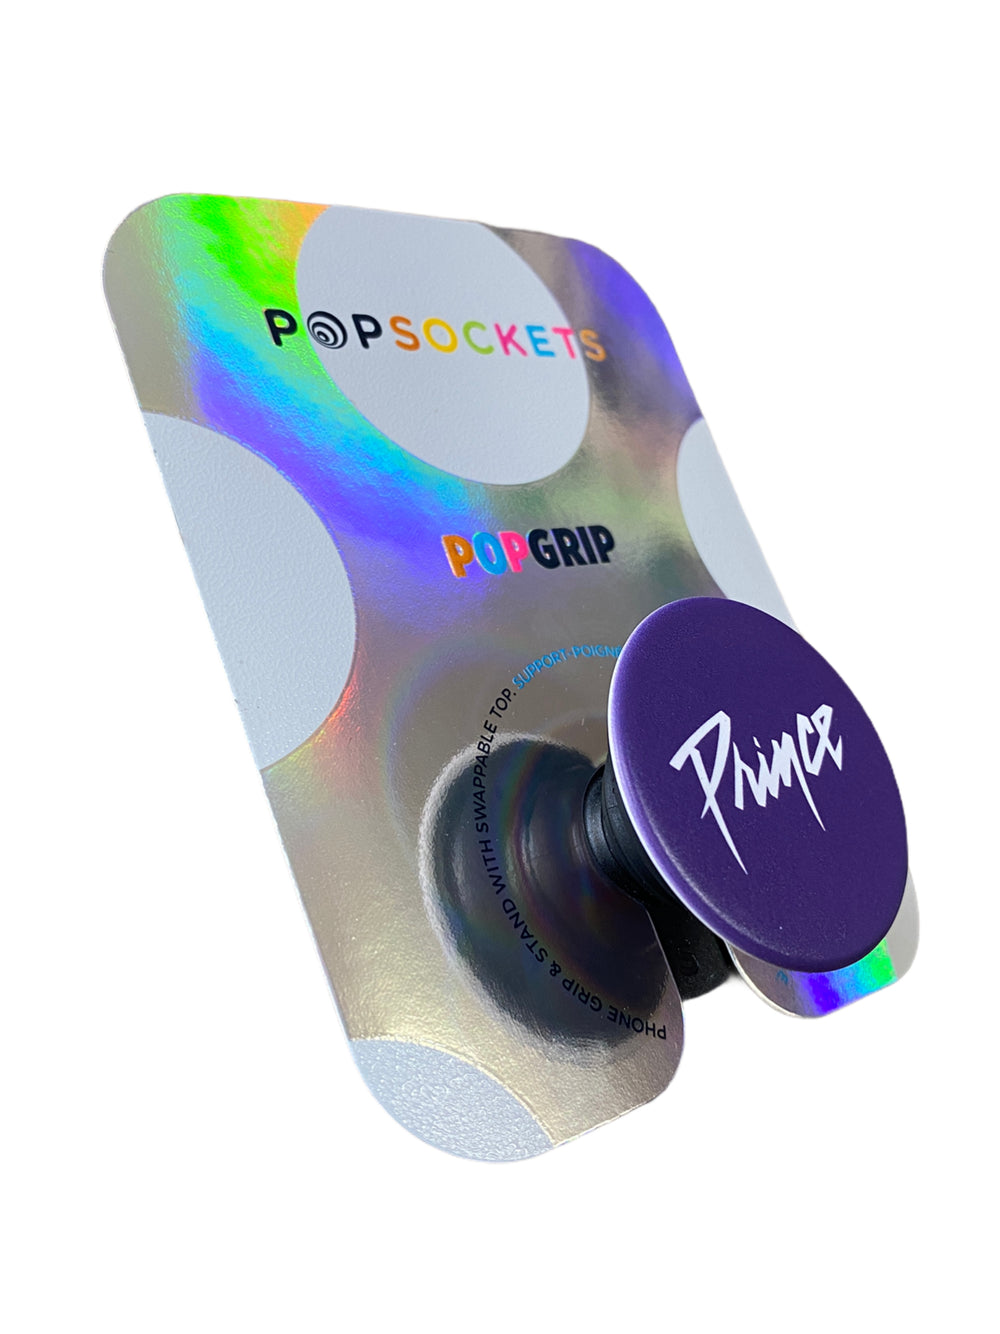 Prince – Official Estate Phone Popsocket Pop Grip Purple Rain Logo Name